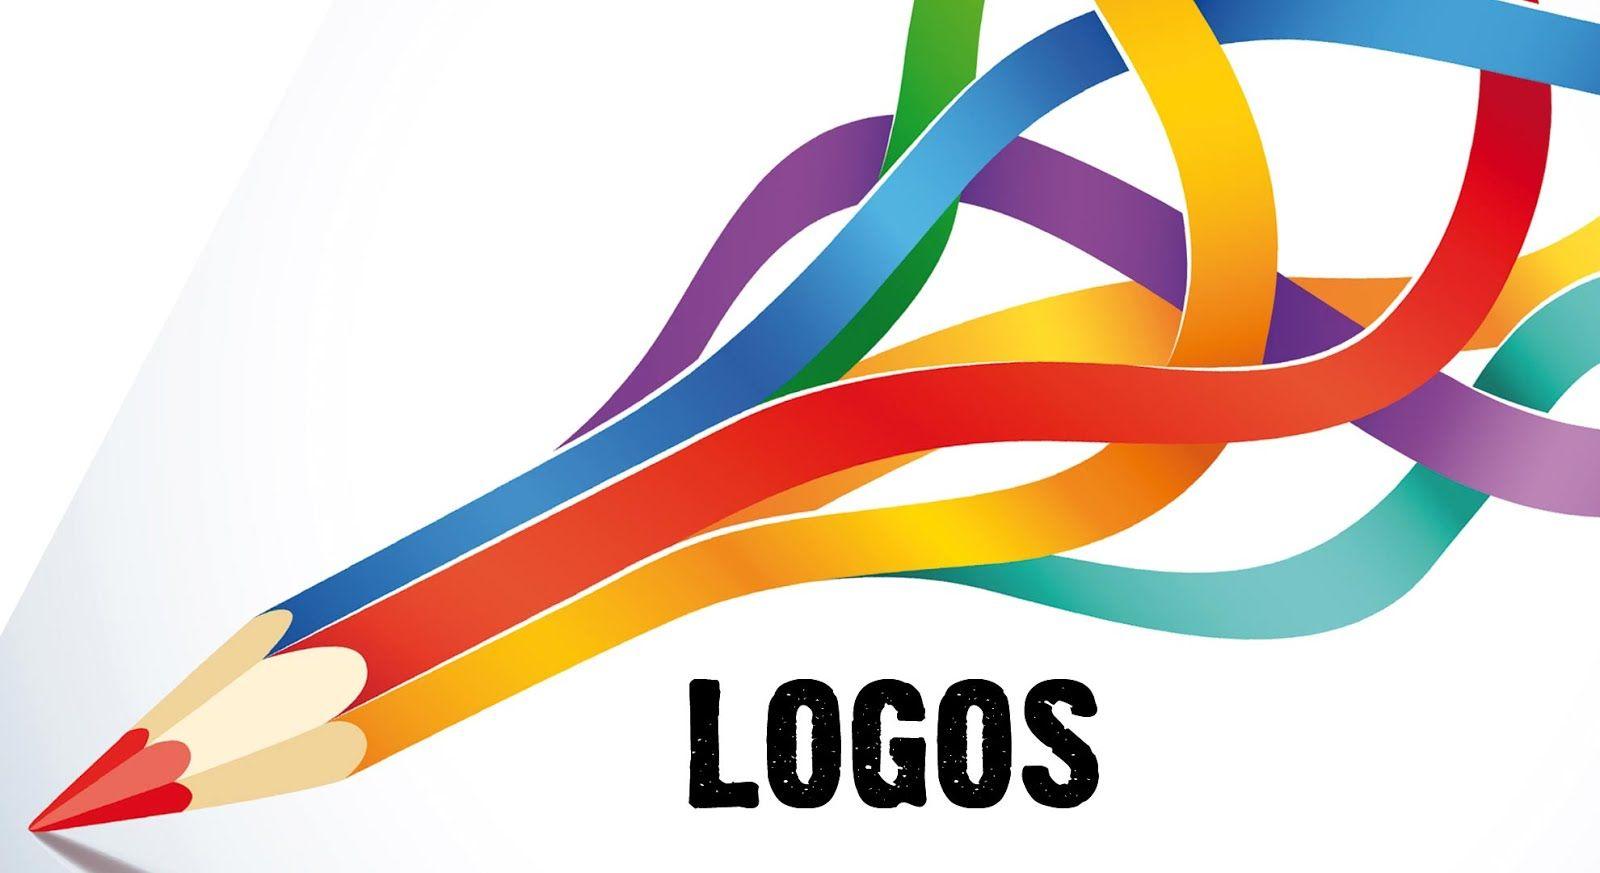 Excellent Logo - How to Make & Design An Excellent Logo - Tech Quark